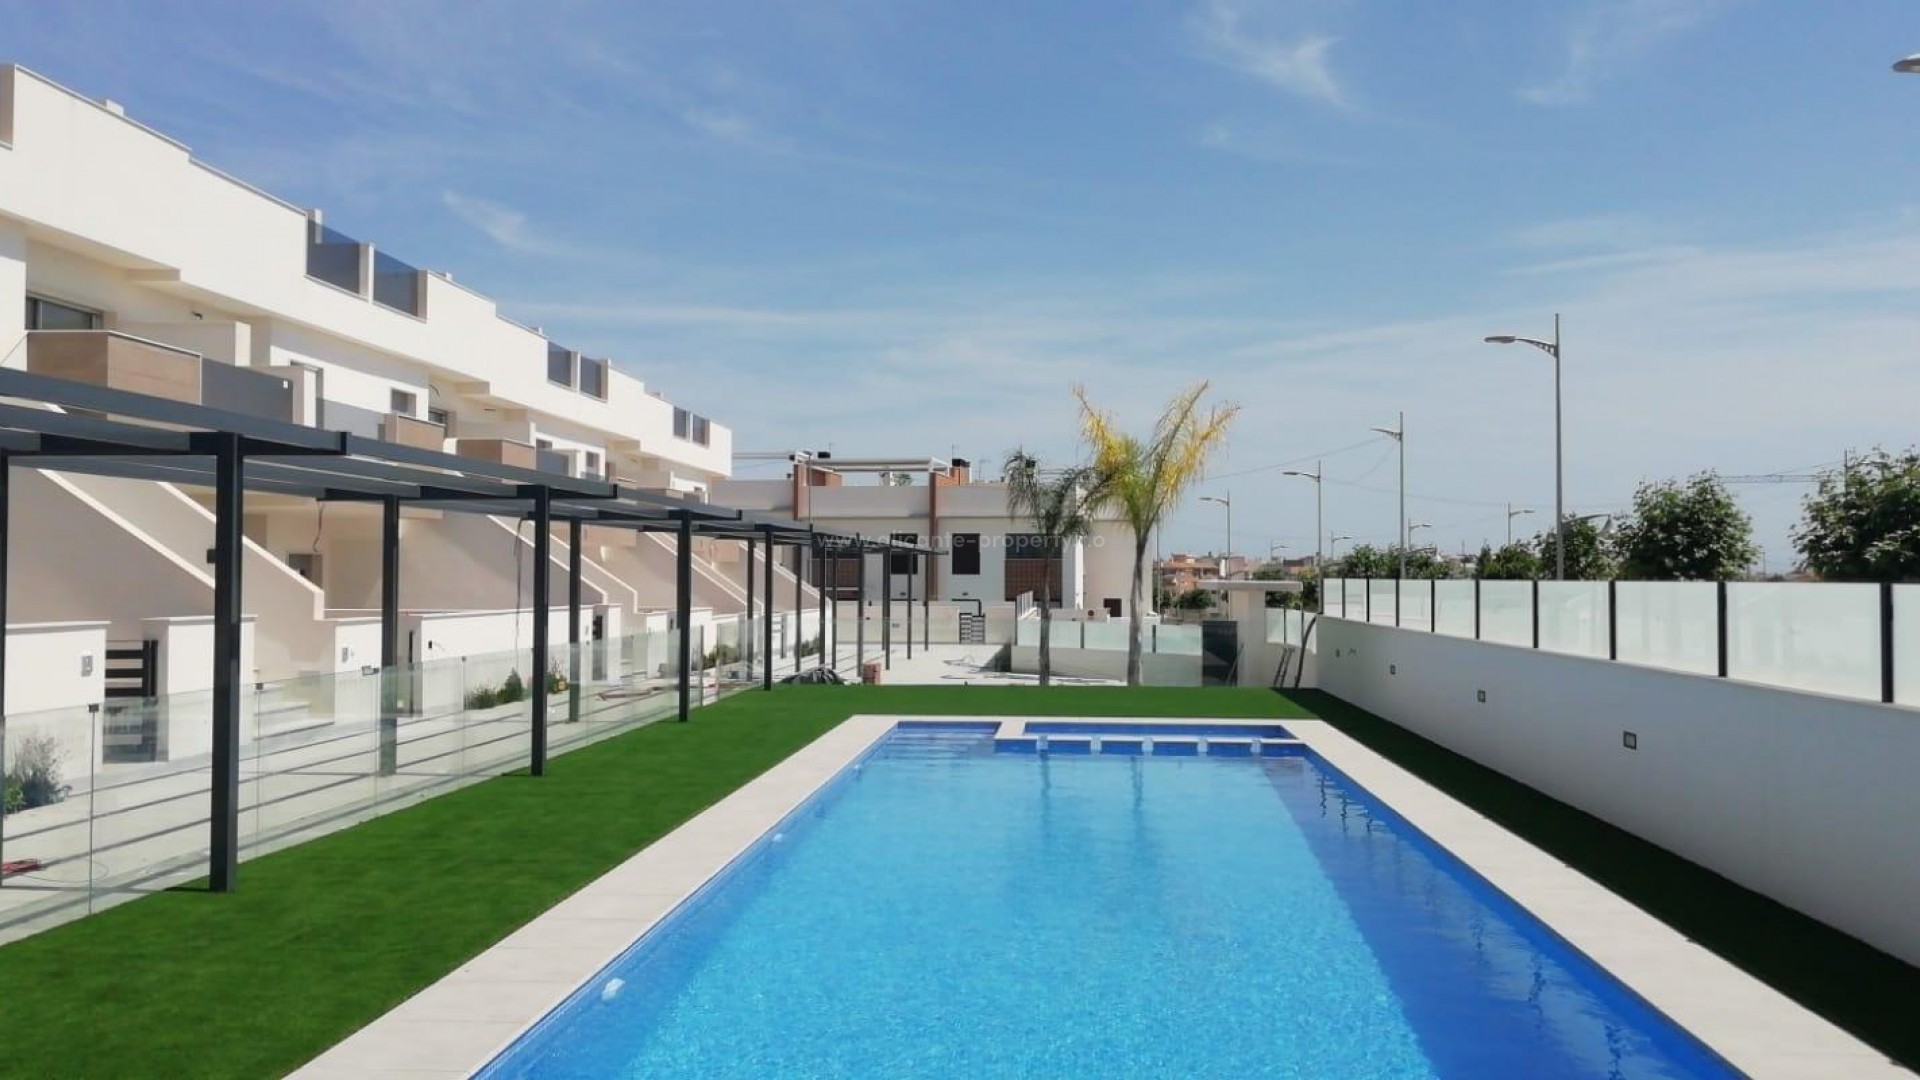 Brand new bungalow apartments in Pilar de La Horadada, 2 bedrooms, 2 bathrooms, terrace, private garden or top floor with private solarium, shared pool